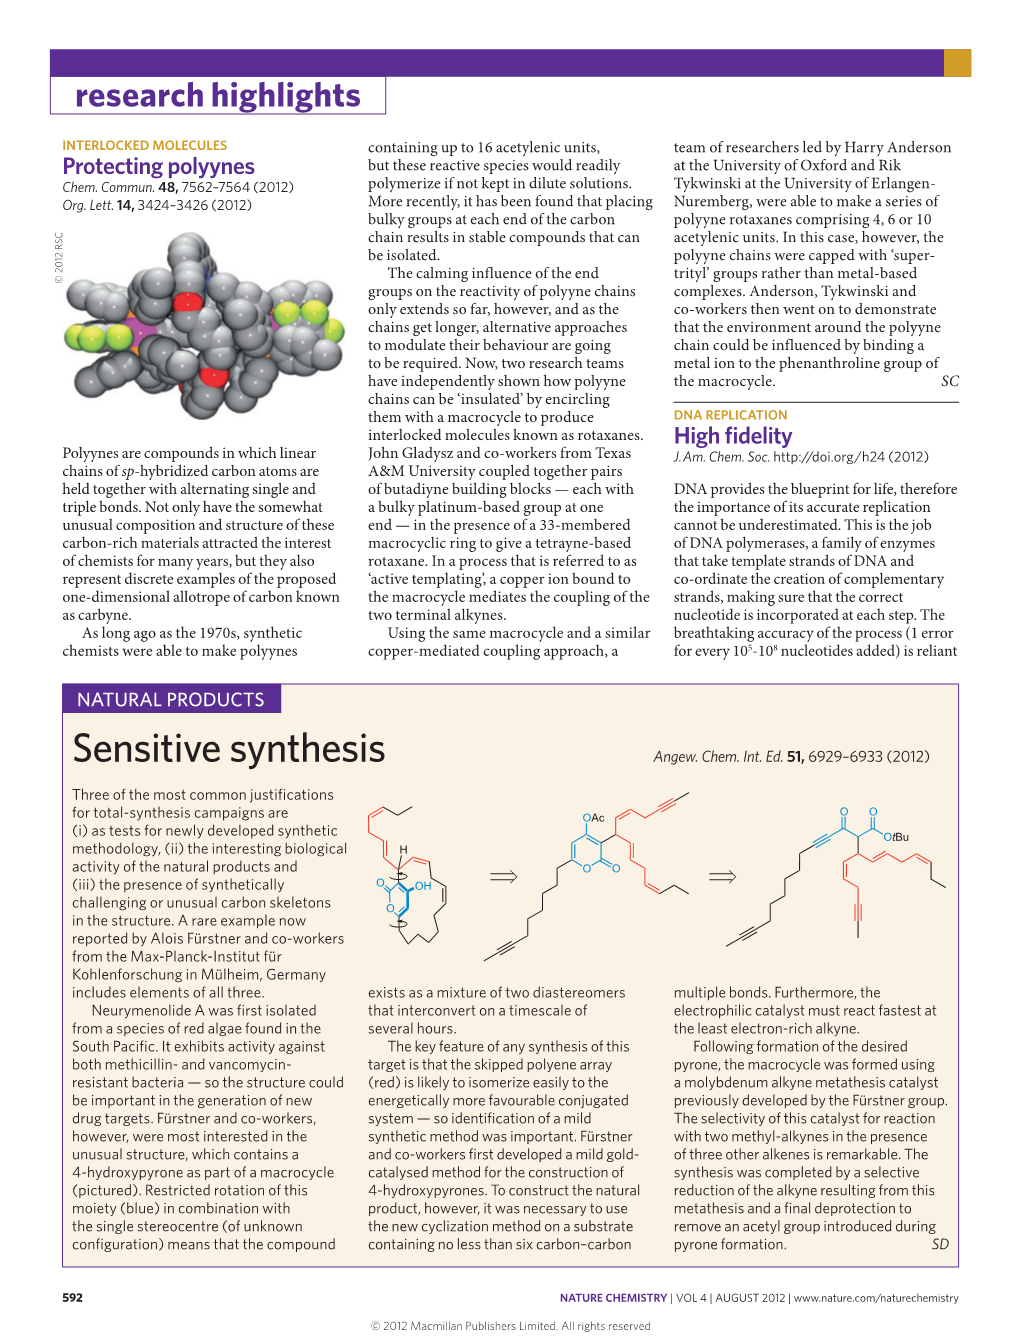 Interlocked Molecules: Protecting Polyynes